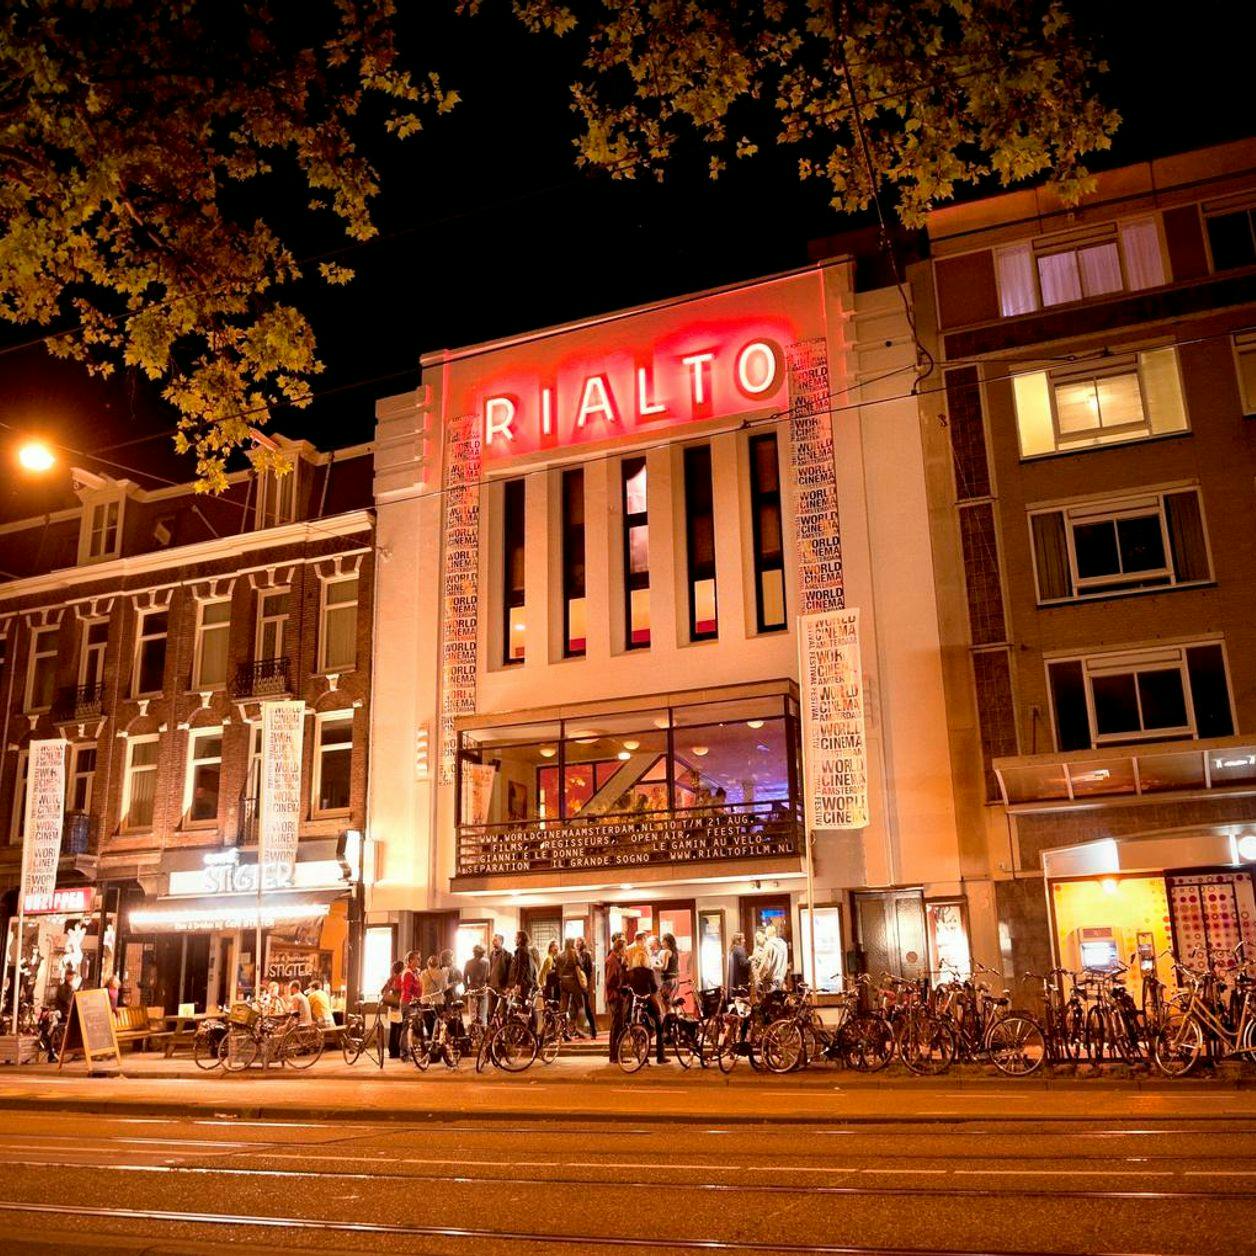 Rialto cinema front of building at night